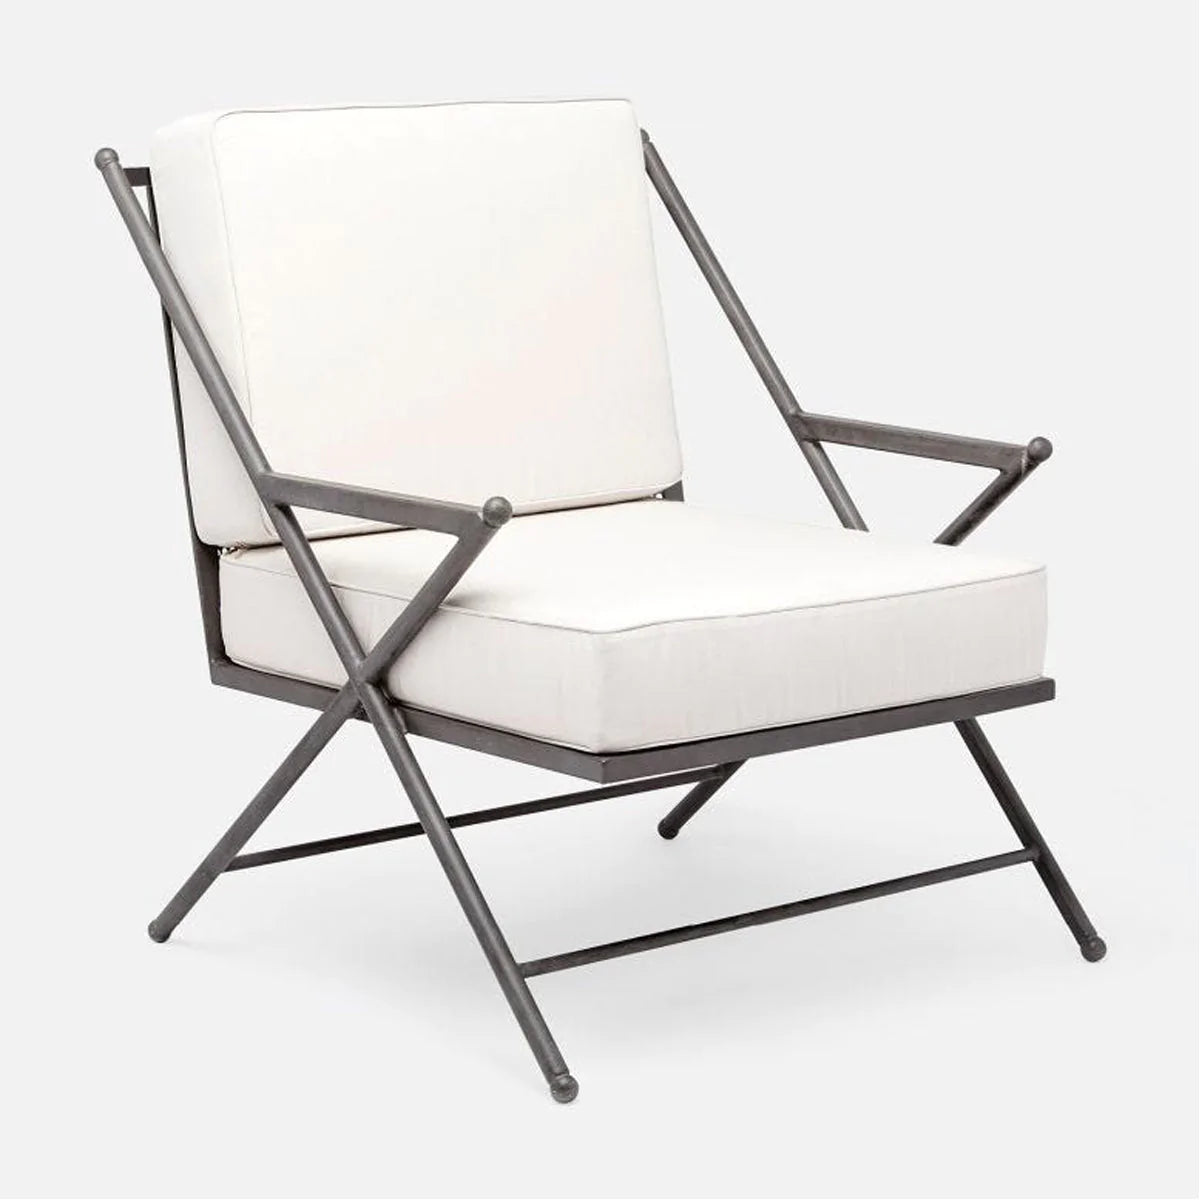 Made Goods Balta Metal XL Outdoor Lounge Chair, Danube Fabric